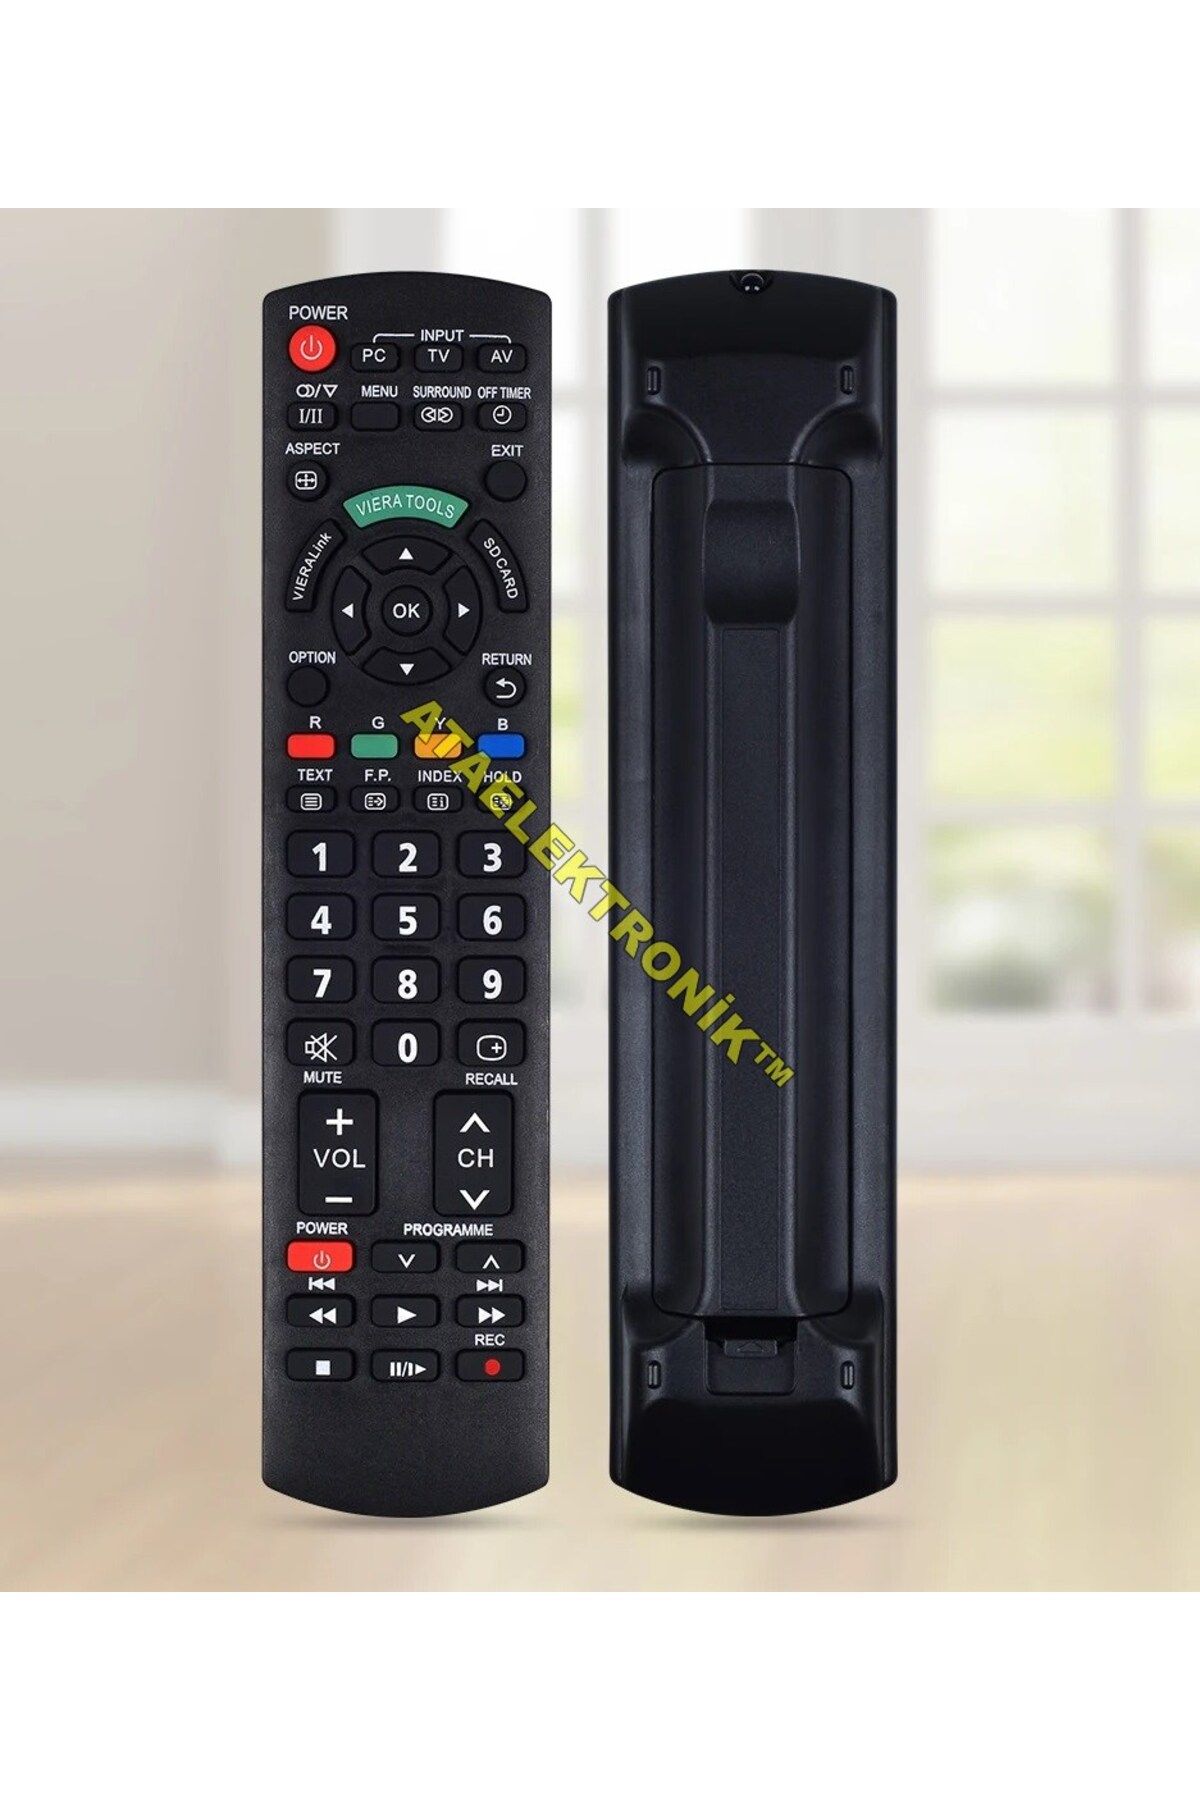 ATAELEKTRONİK Panasonic Viera TV N2QAYB000350 kumanda Universal evrensel plazma lcd led tv HDTV